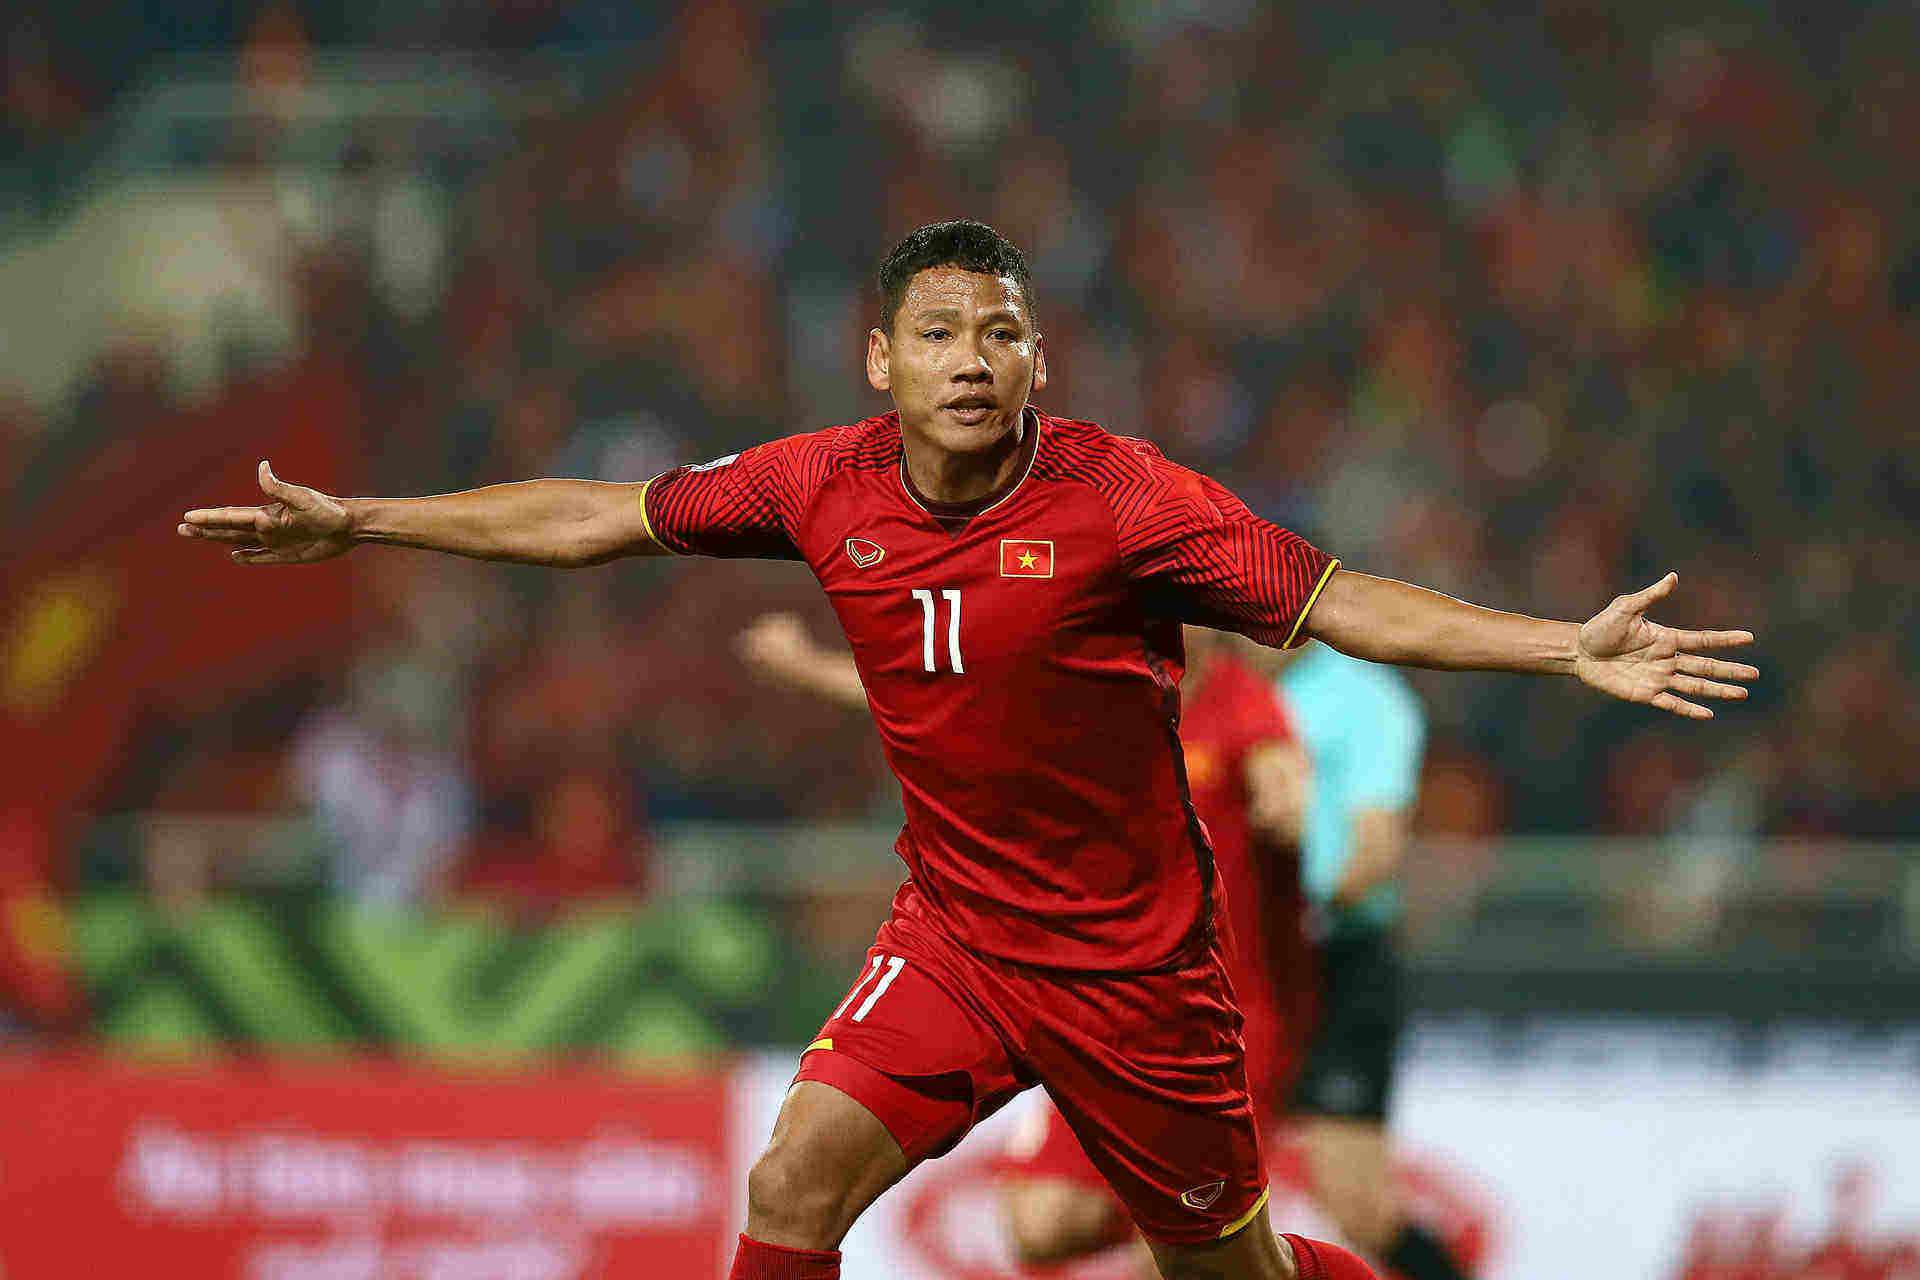 FINAL 2ND LEG REPORT: Vietnam 1 Malaysia 0 (Vietnam win 3-2 on aggregate)